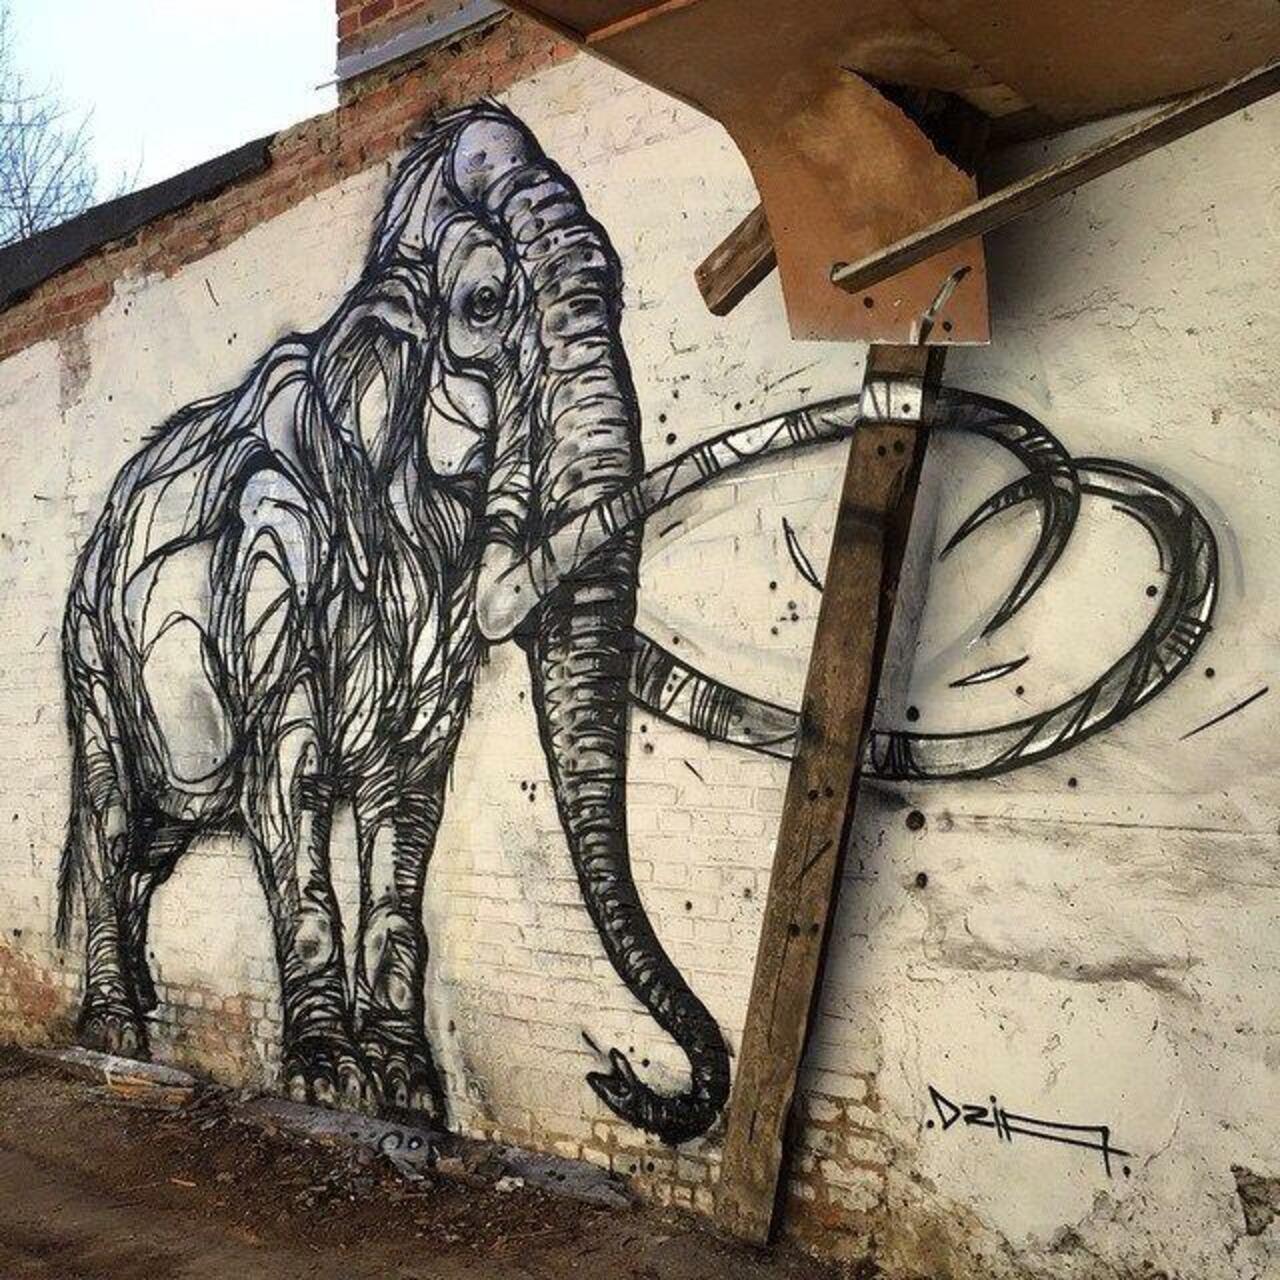 Mammoth. New nature in Street Art wall by DZIA 

#art #graffiti #mural #streetart http://t.co/VjW1rWHPw1